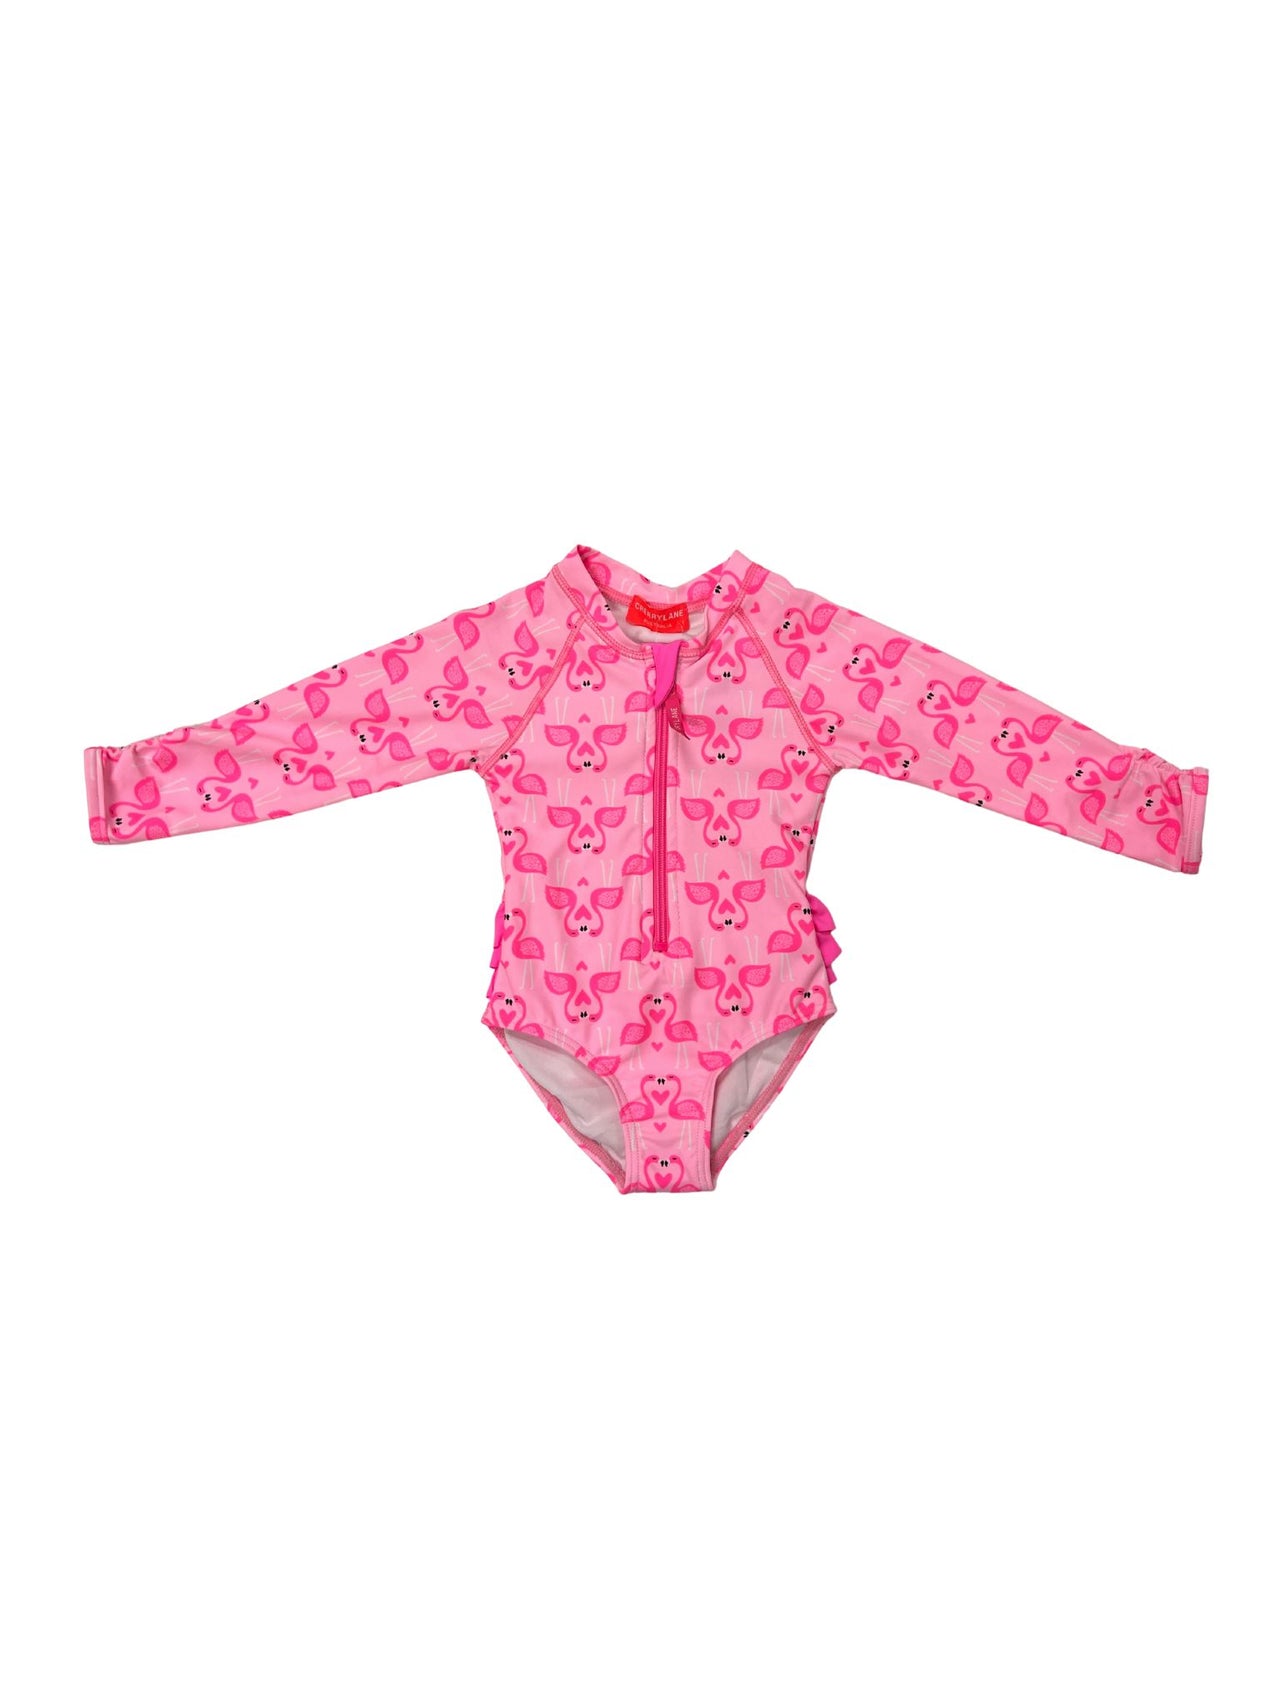 Infant Girls Zip Front Long Sleeve Rash Suit